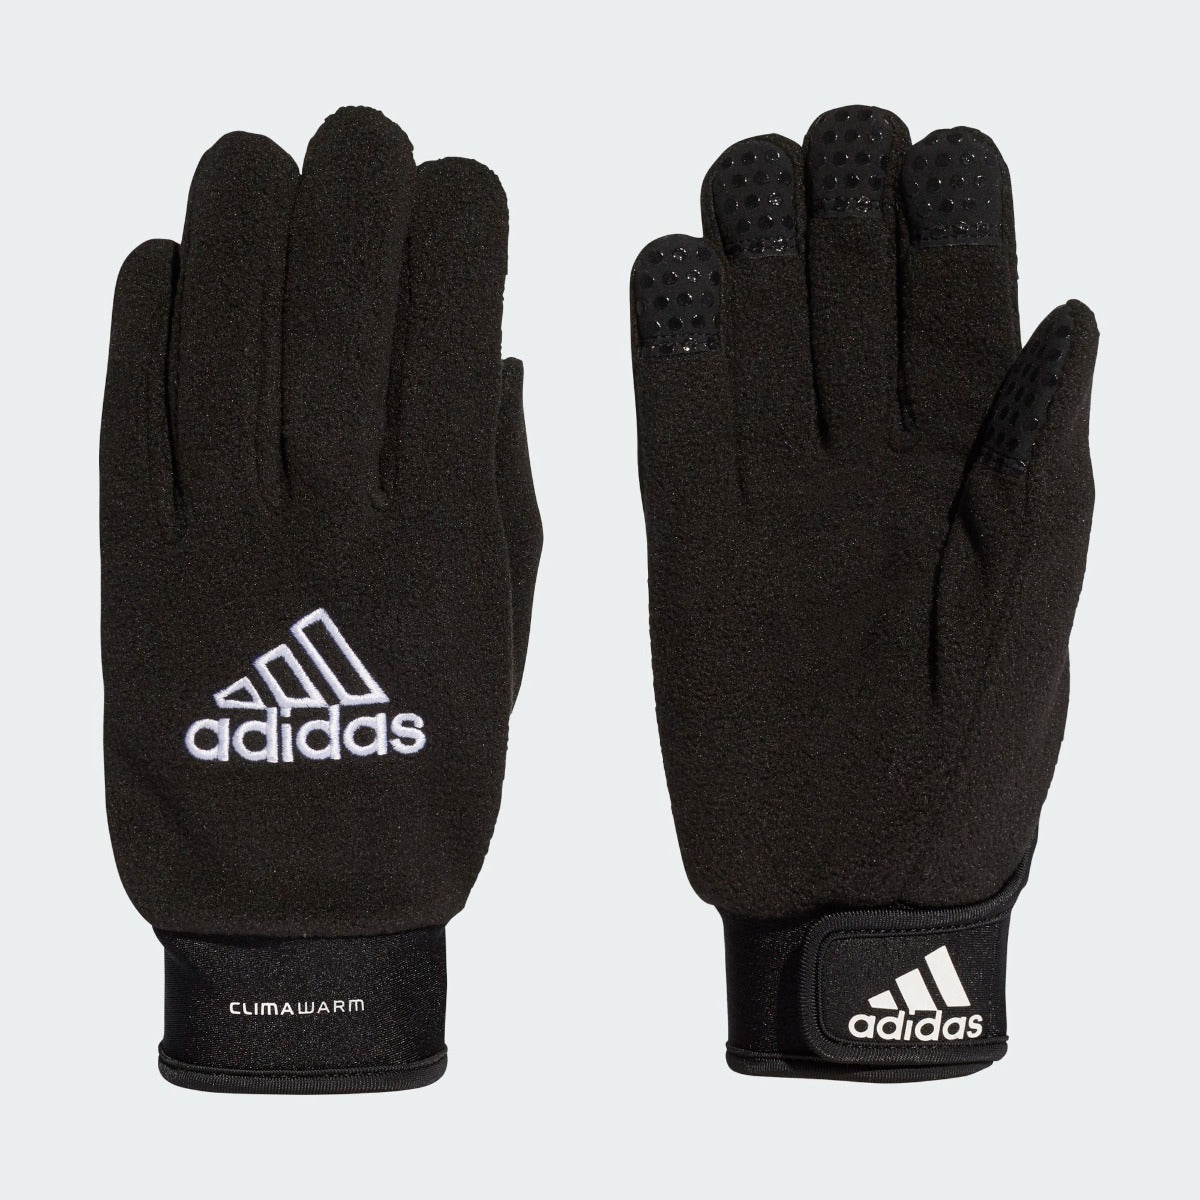 Adidas Field Players Gloves - Black (Set)